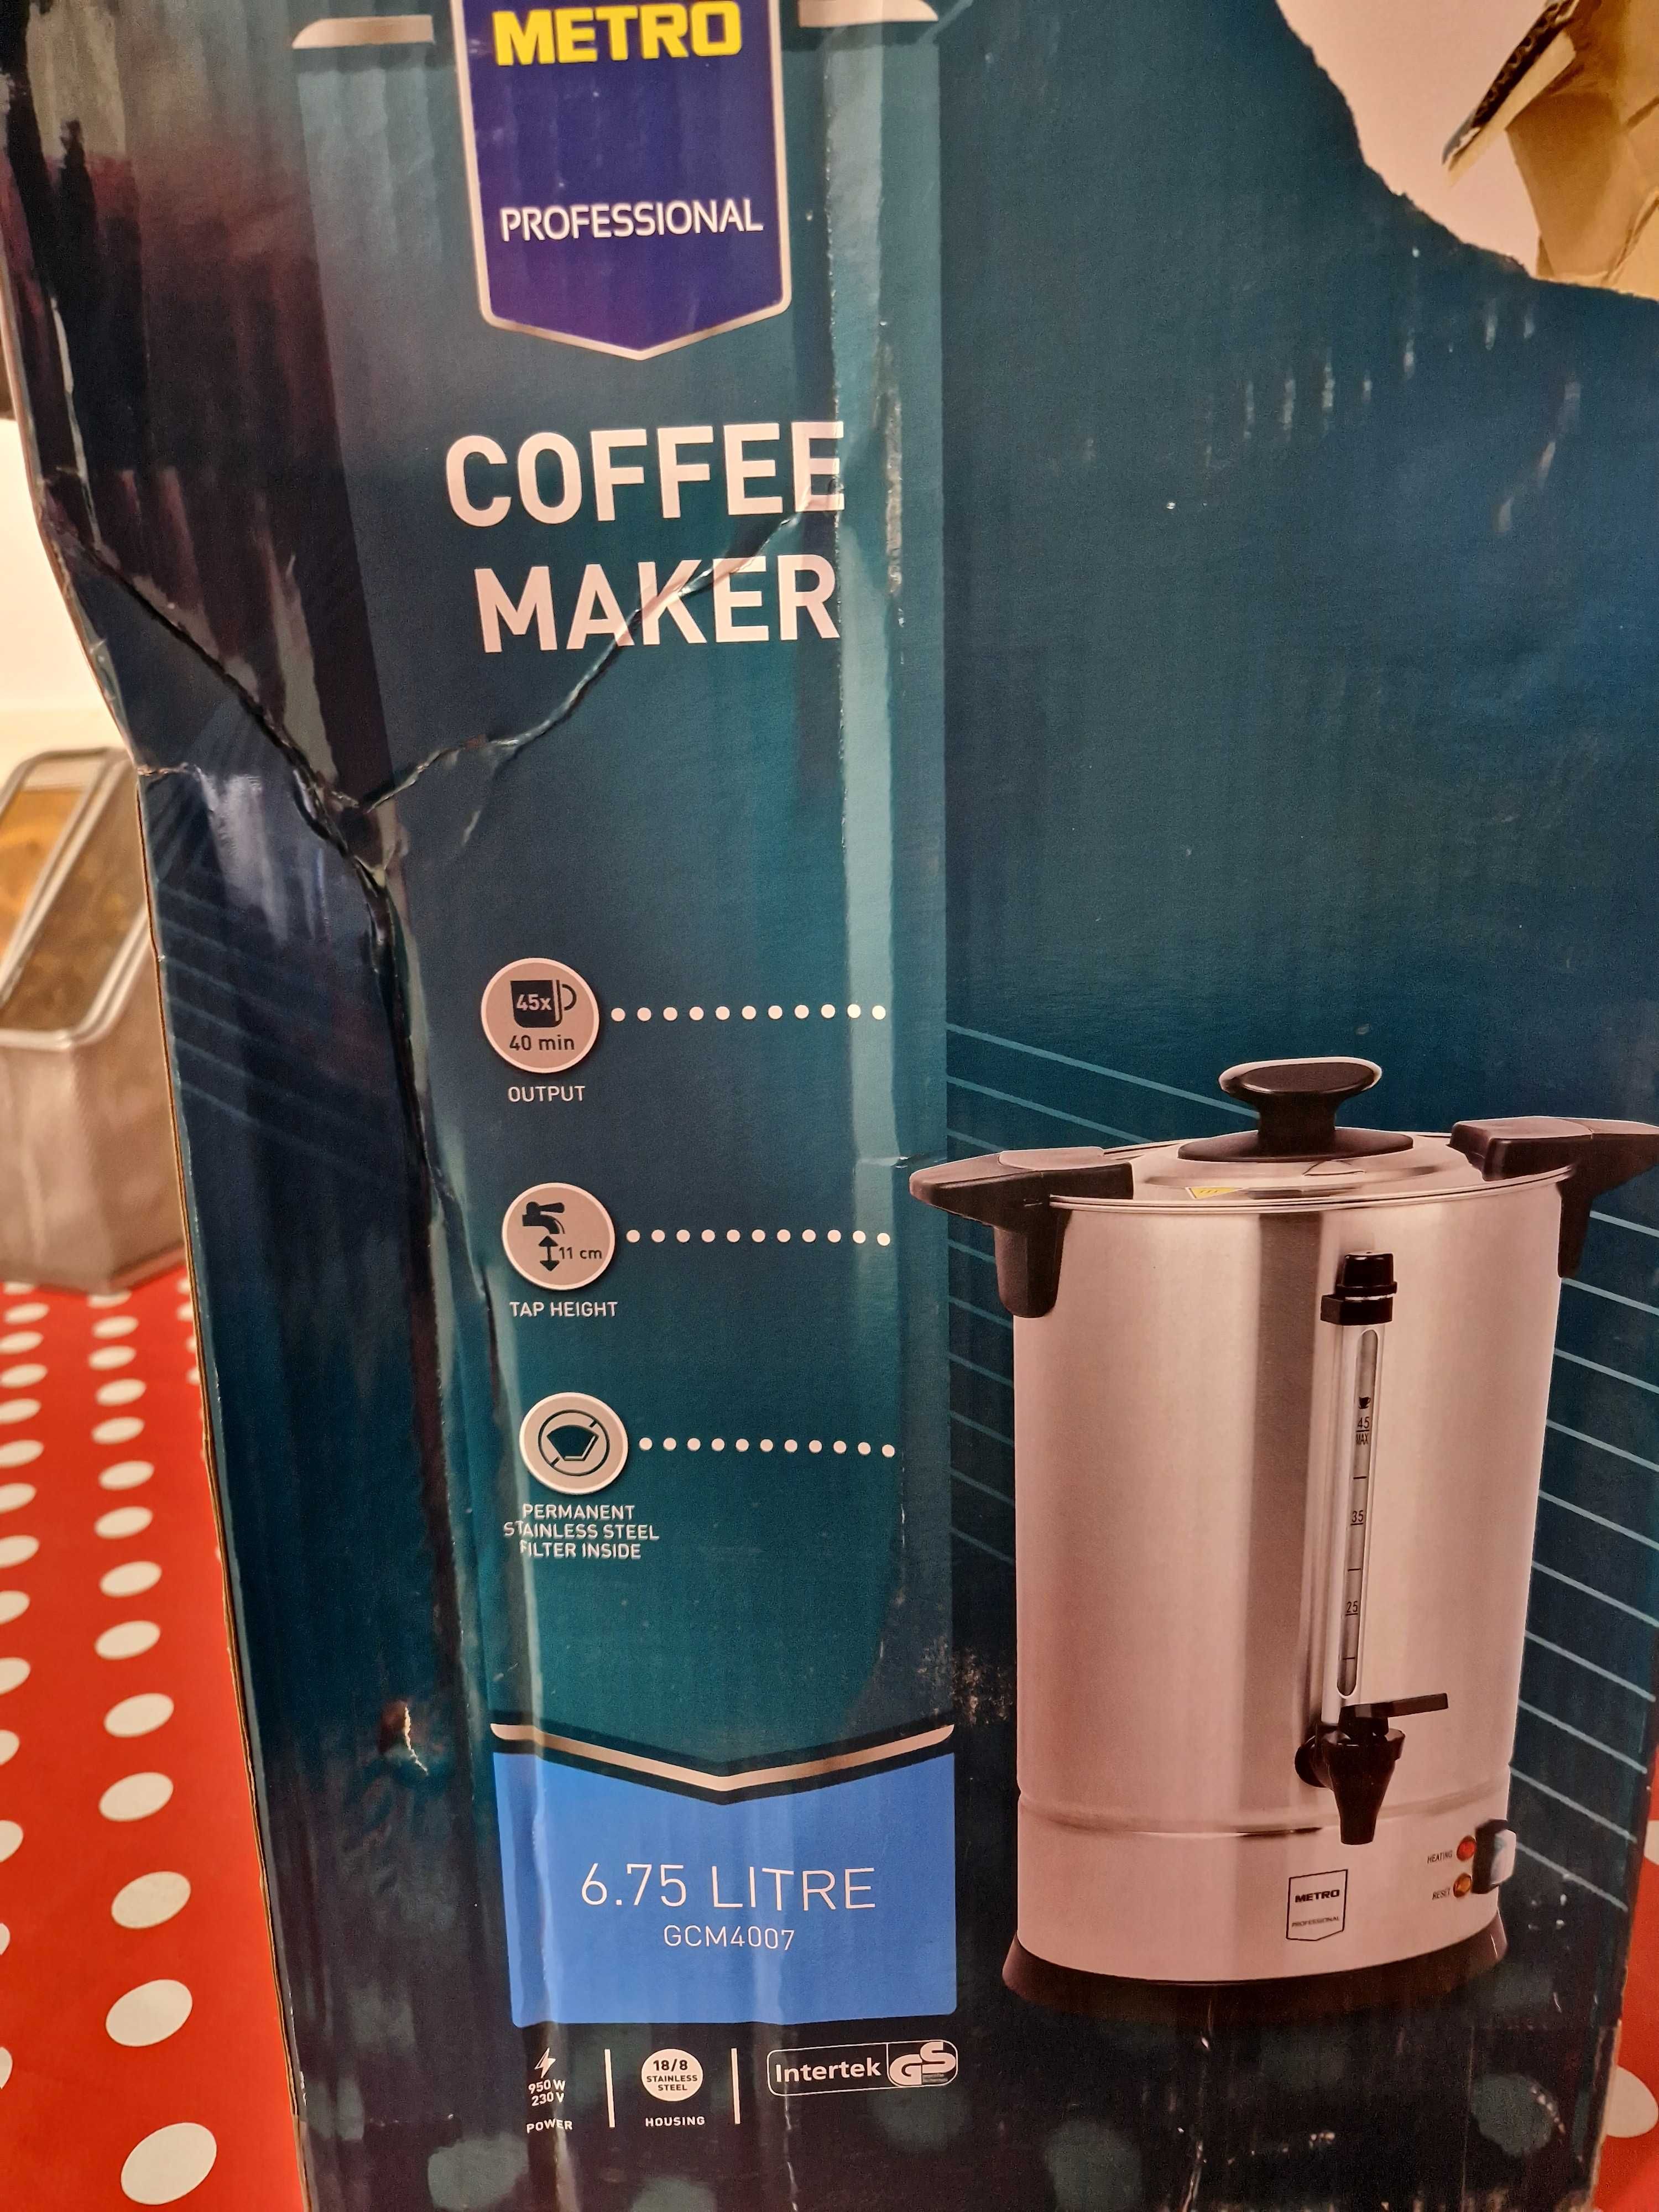 Coffee Maker profesional GCM4007 Metro